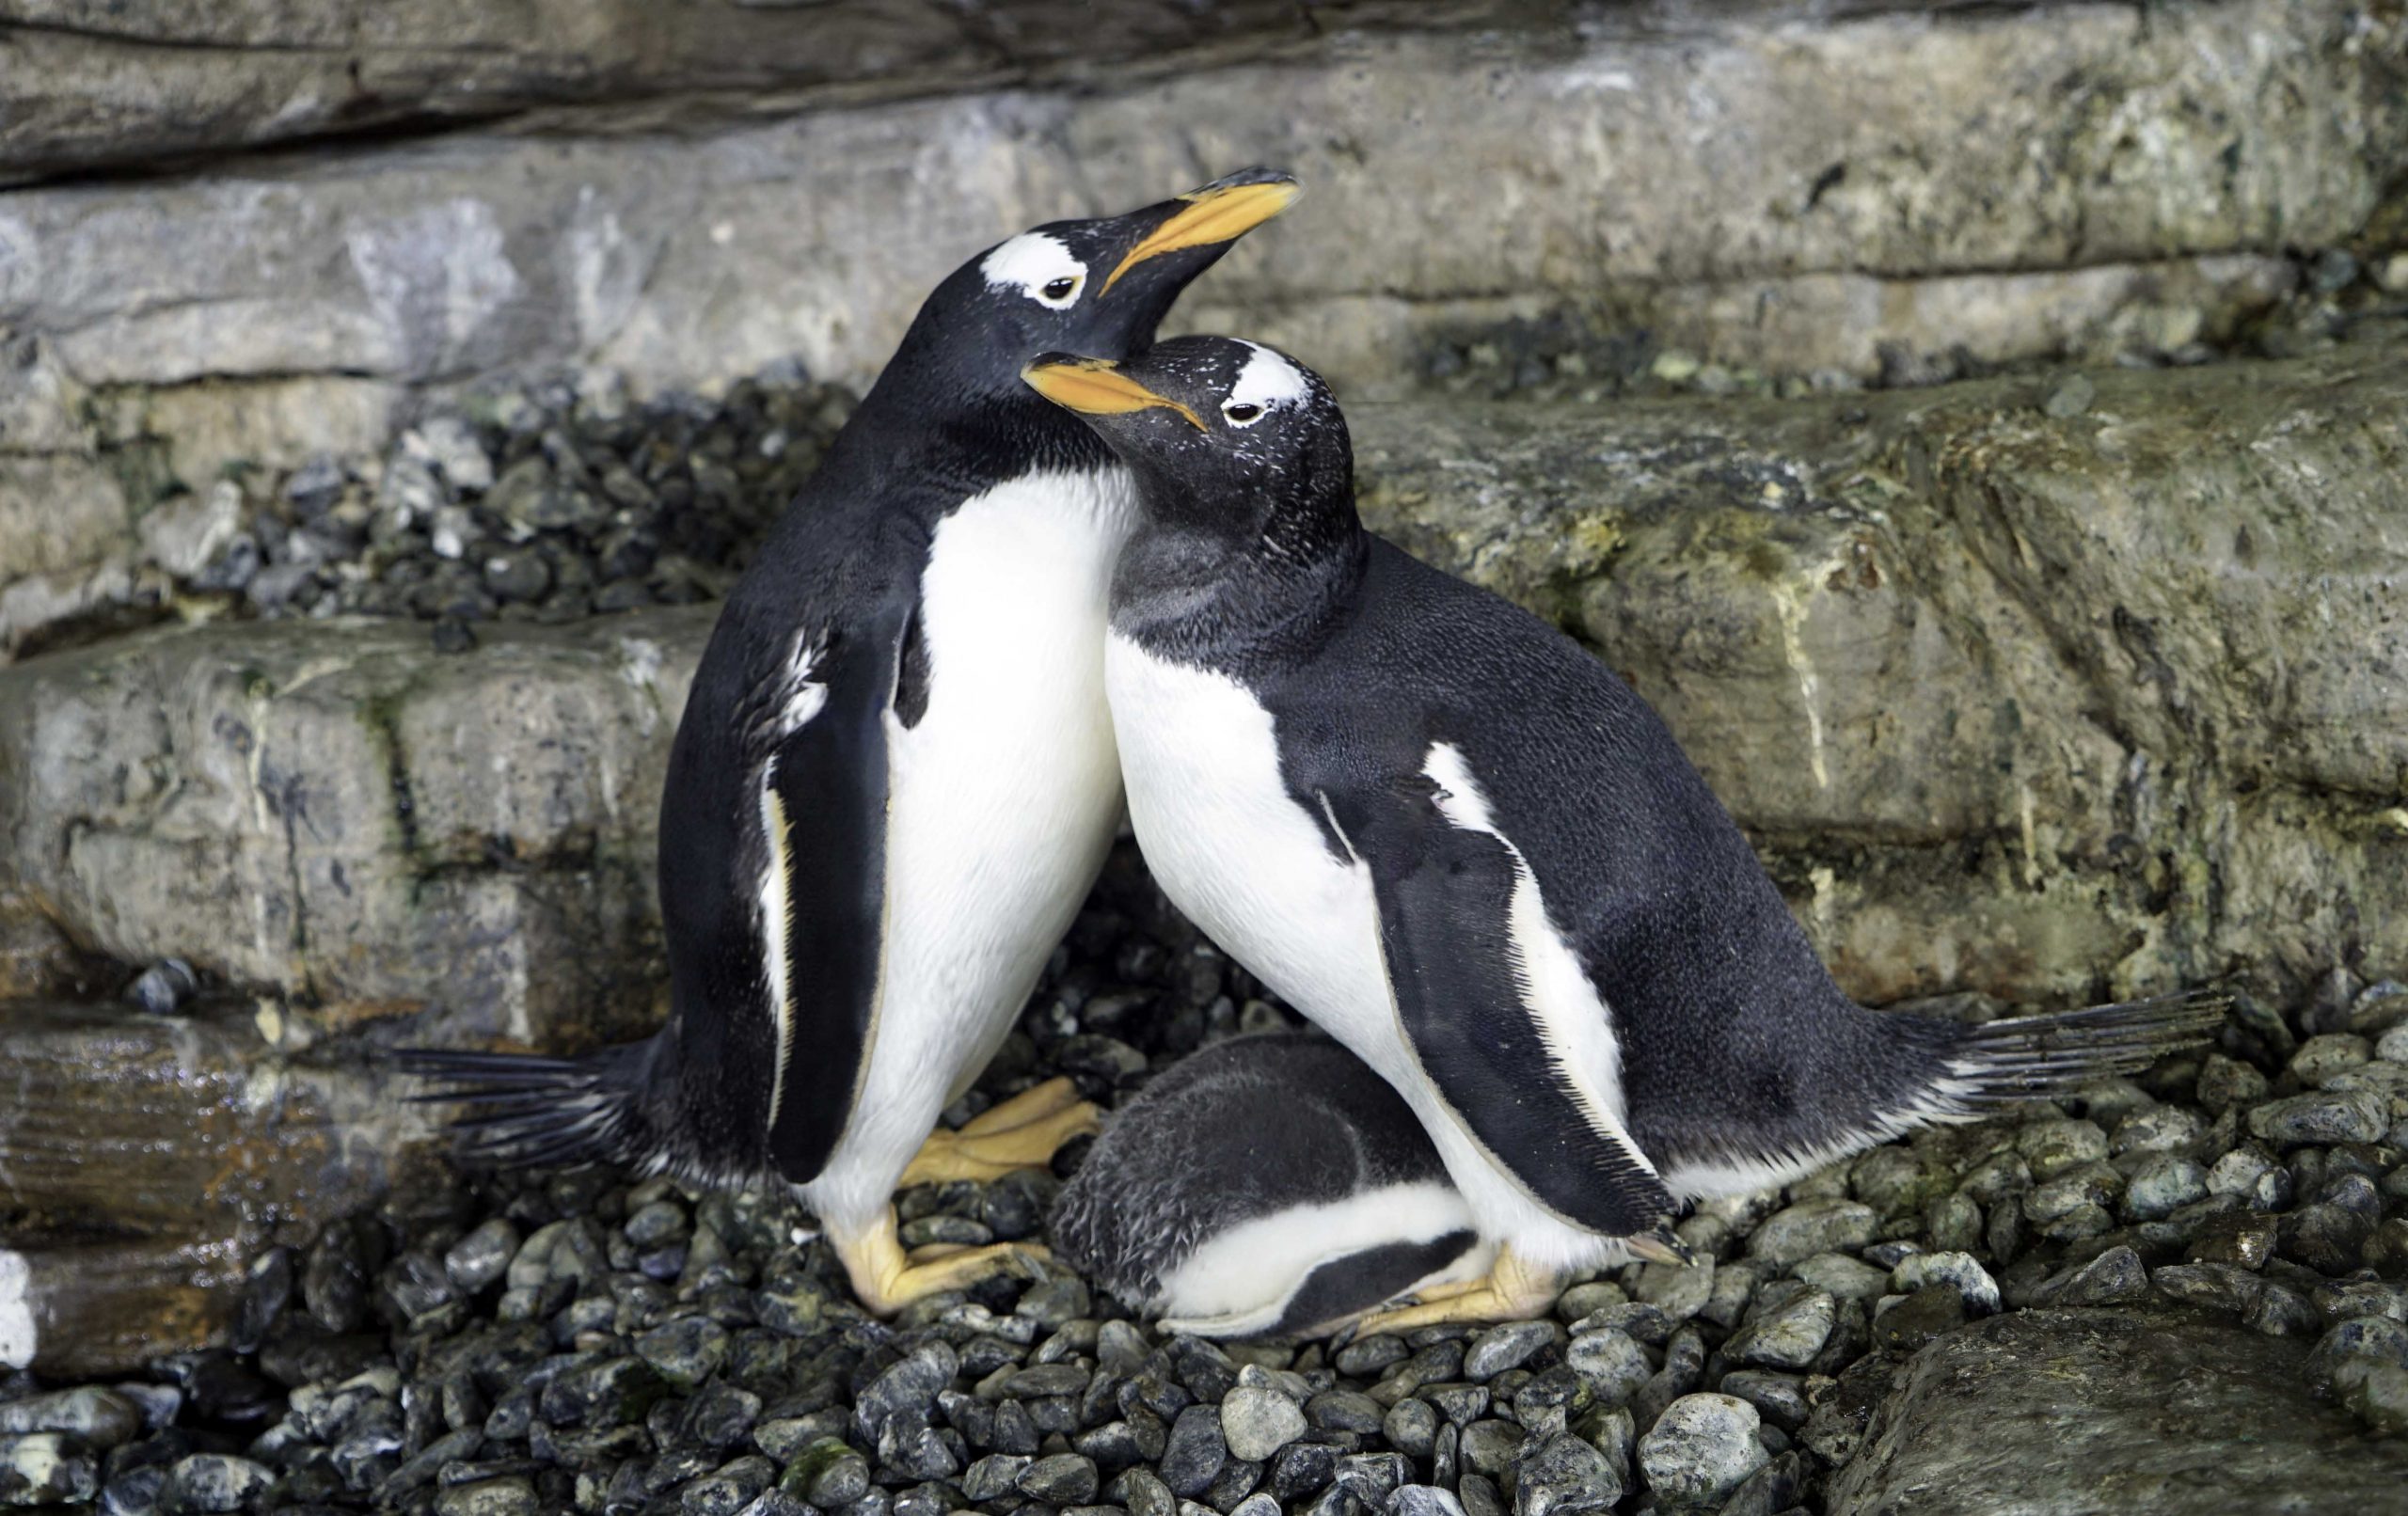 Lesbian penguin ‘power couple’ welcomes chick at Spanish aquarium